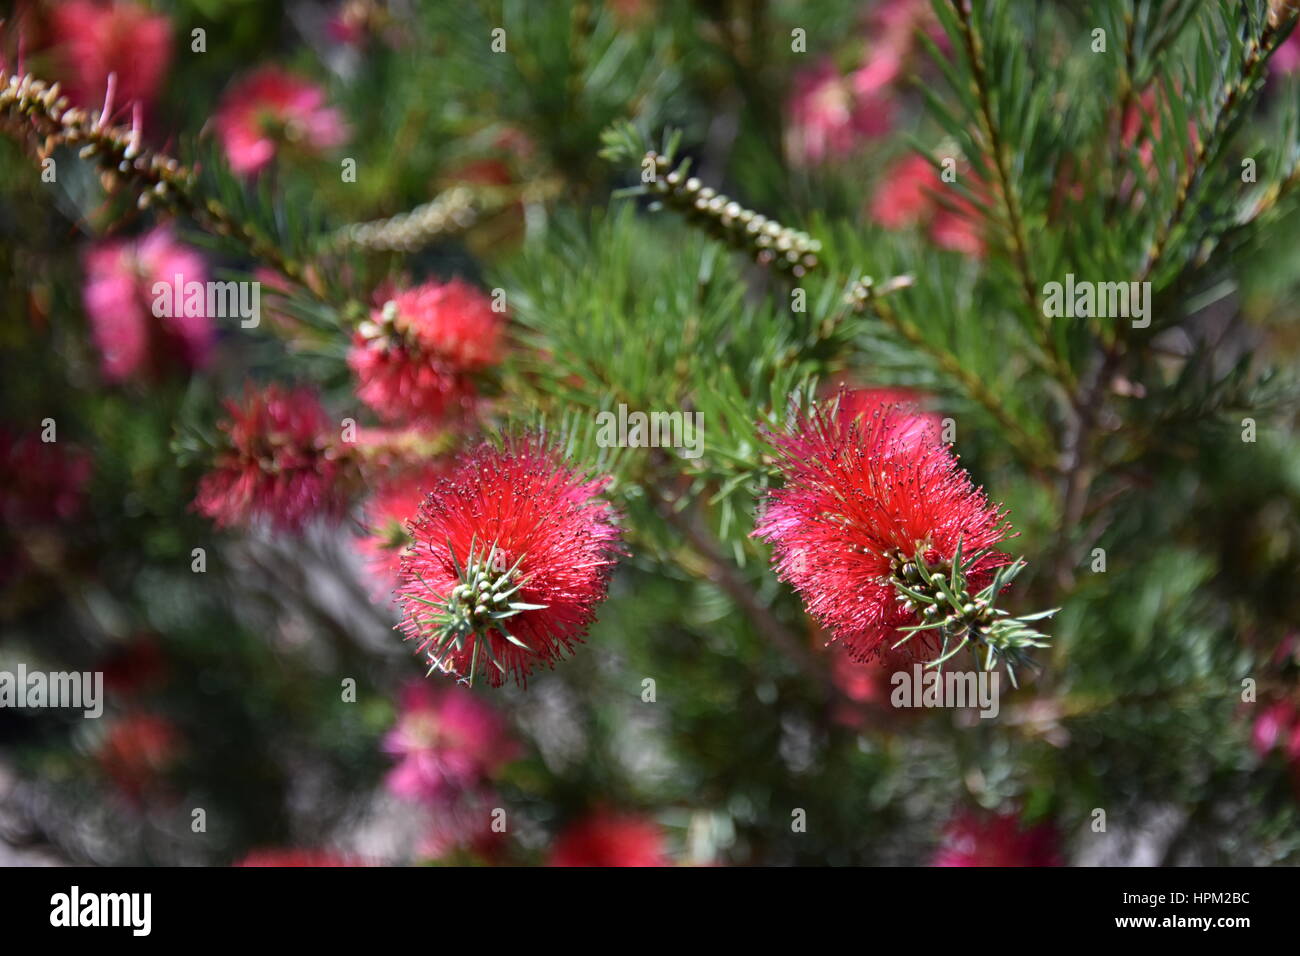 Closeup of a pink bottle brush. Native australian flower pink bottlebrush shrub flowering. Banksia ericifolia with pink flower. Stock Photo